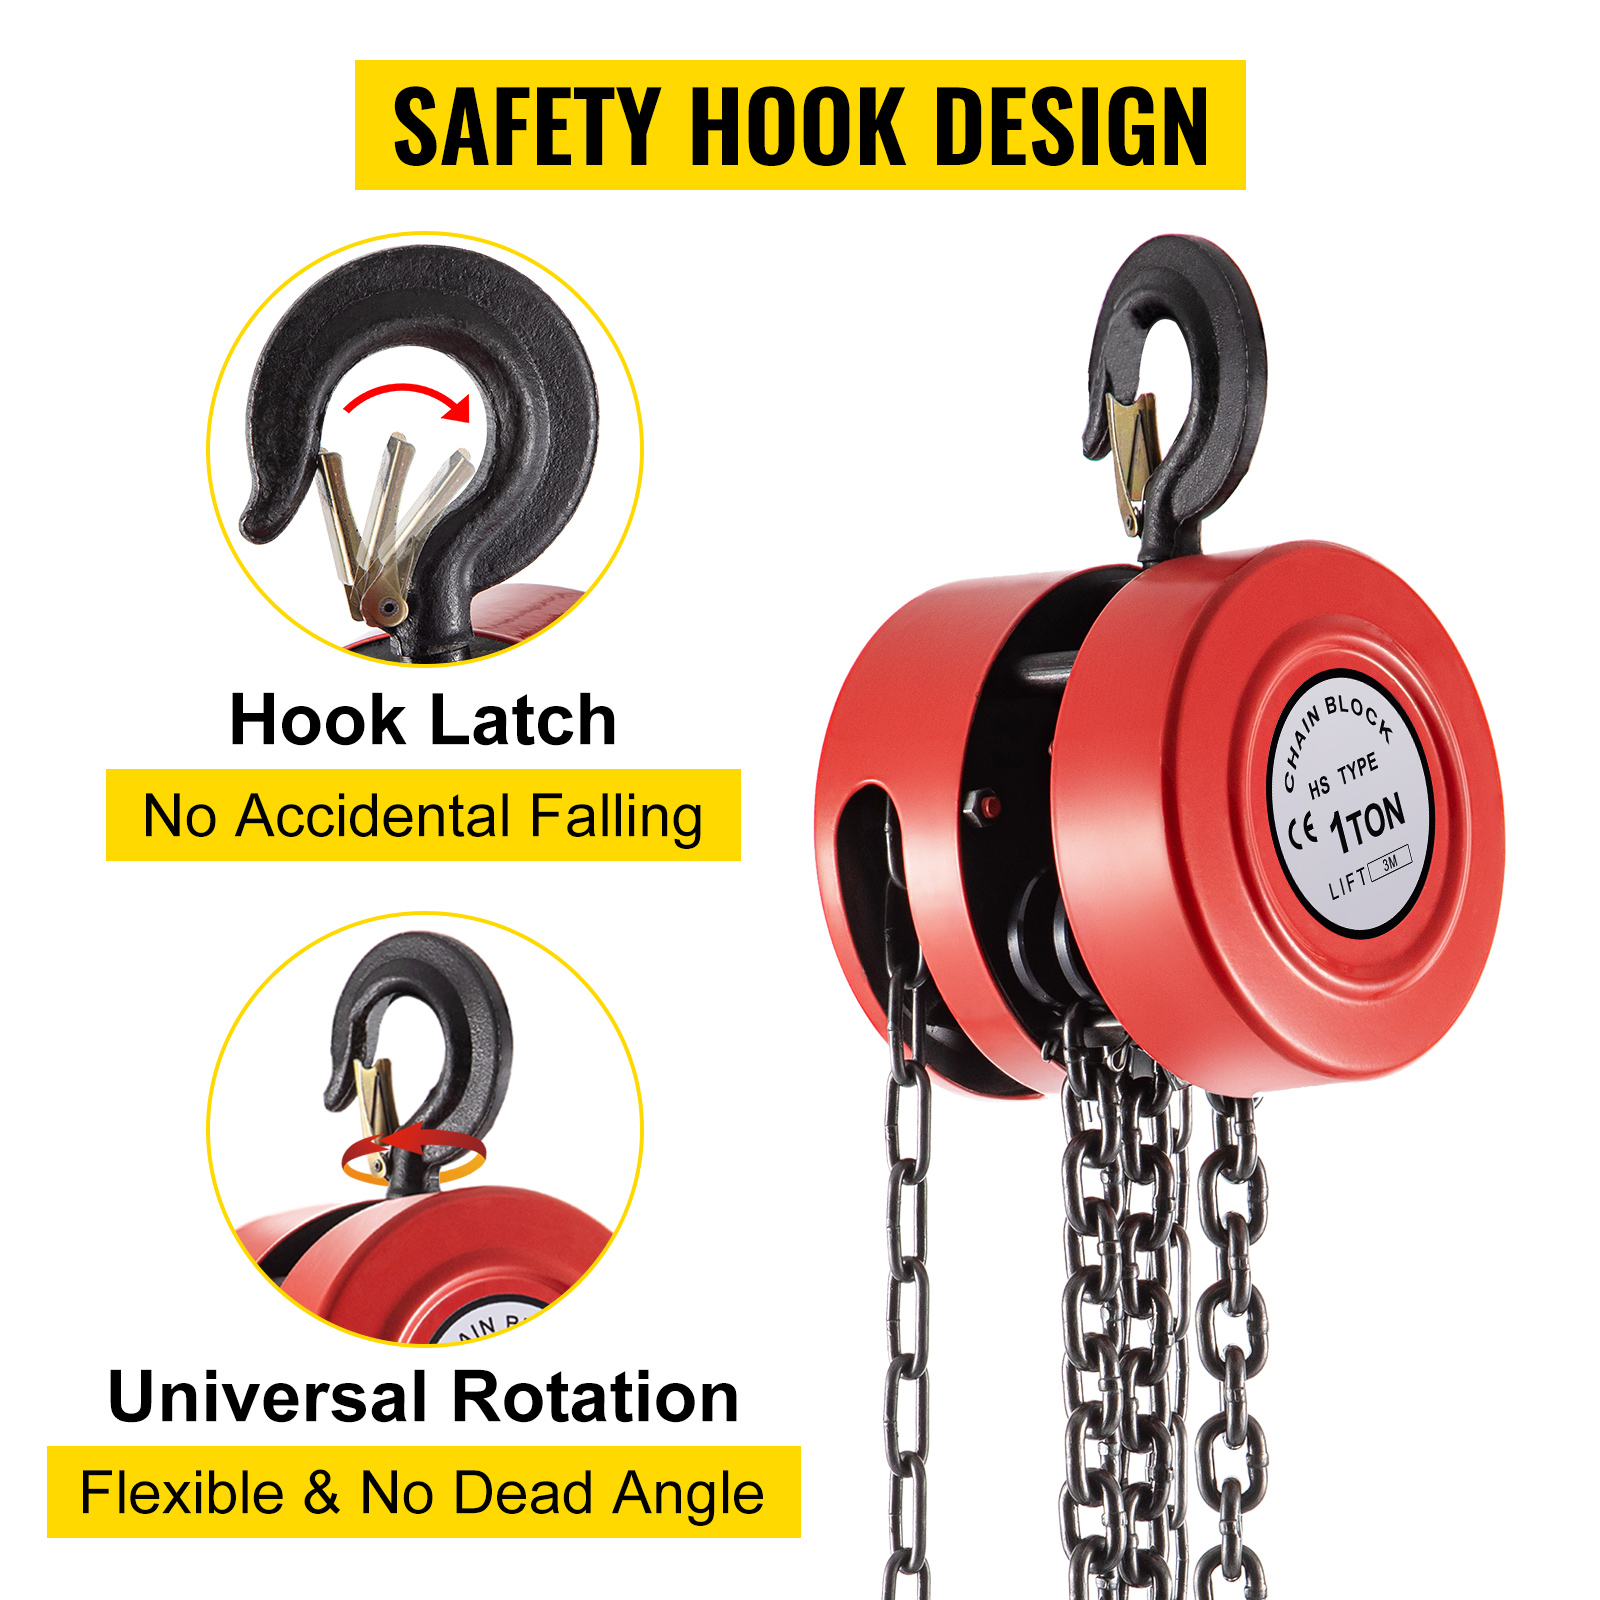 1ton Crane Hook Block Chain Hoist Chain Block - China Chain Block